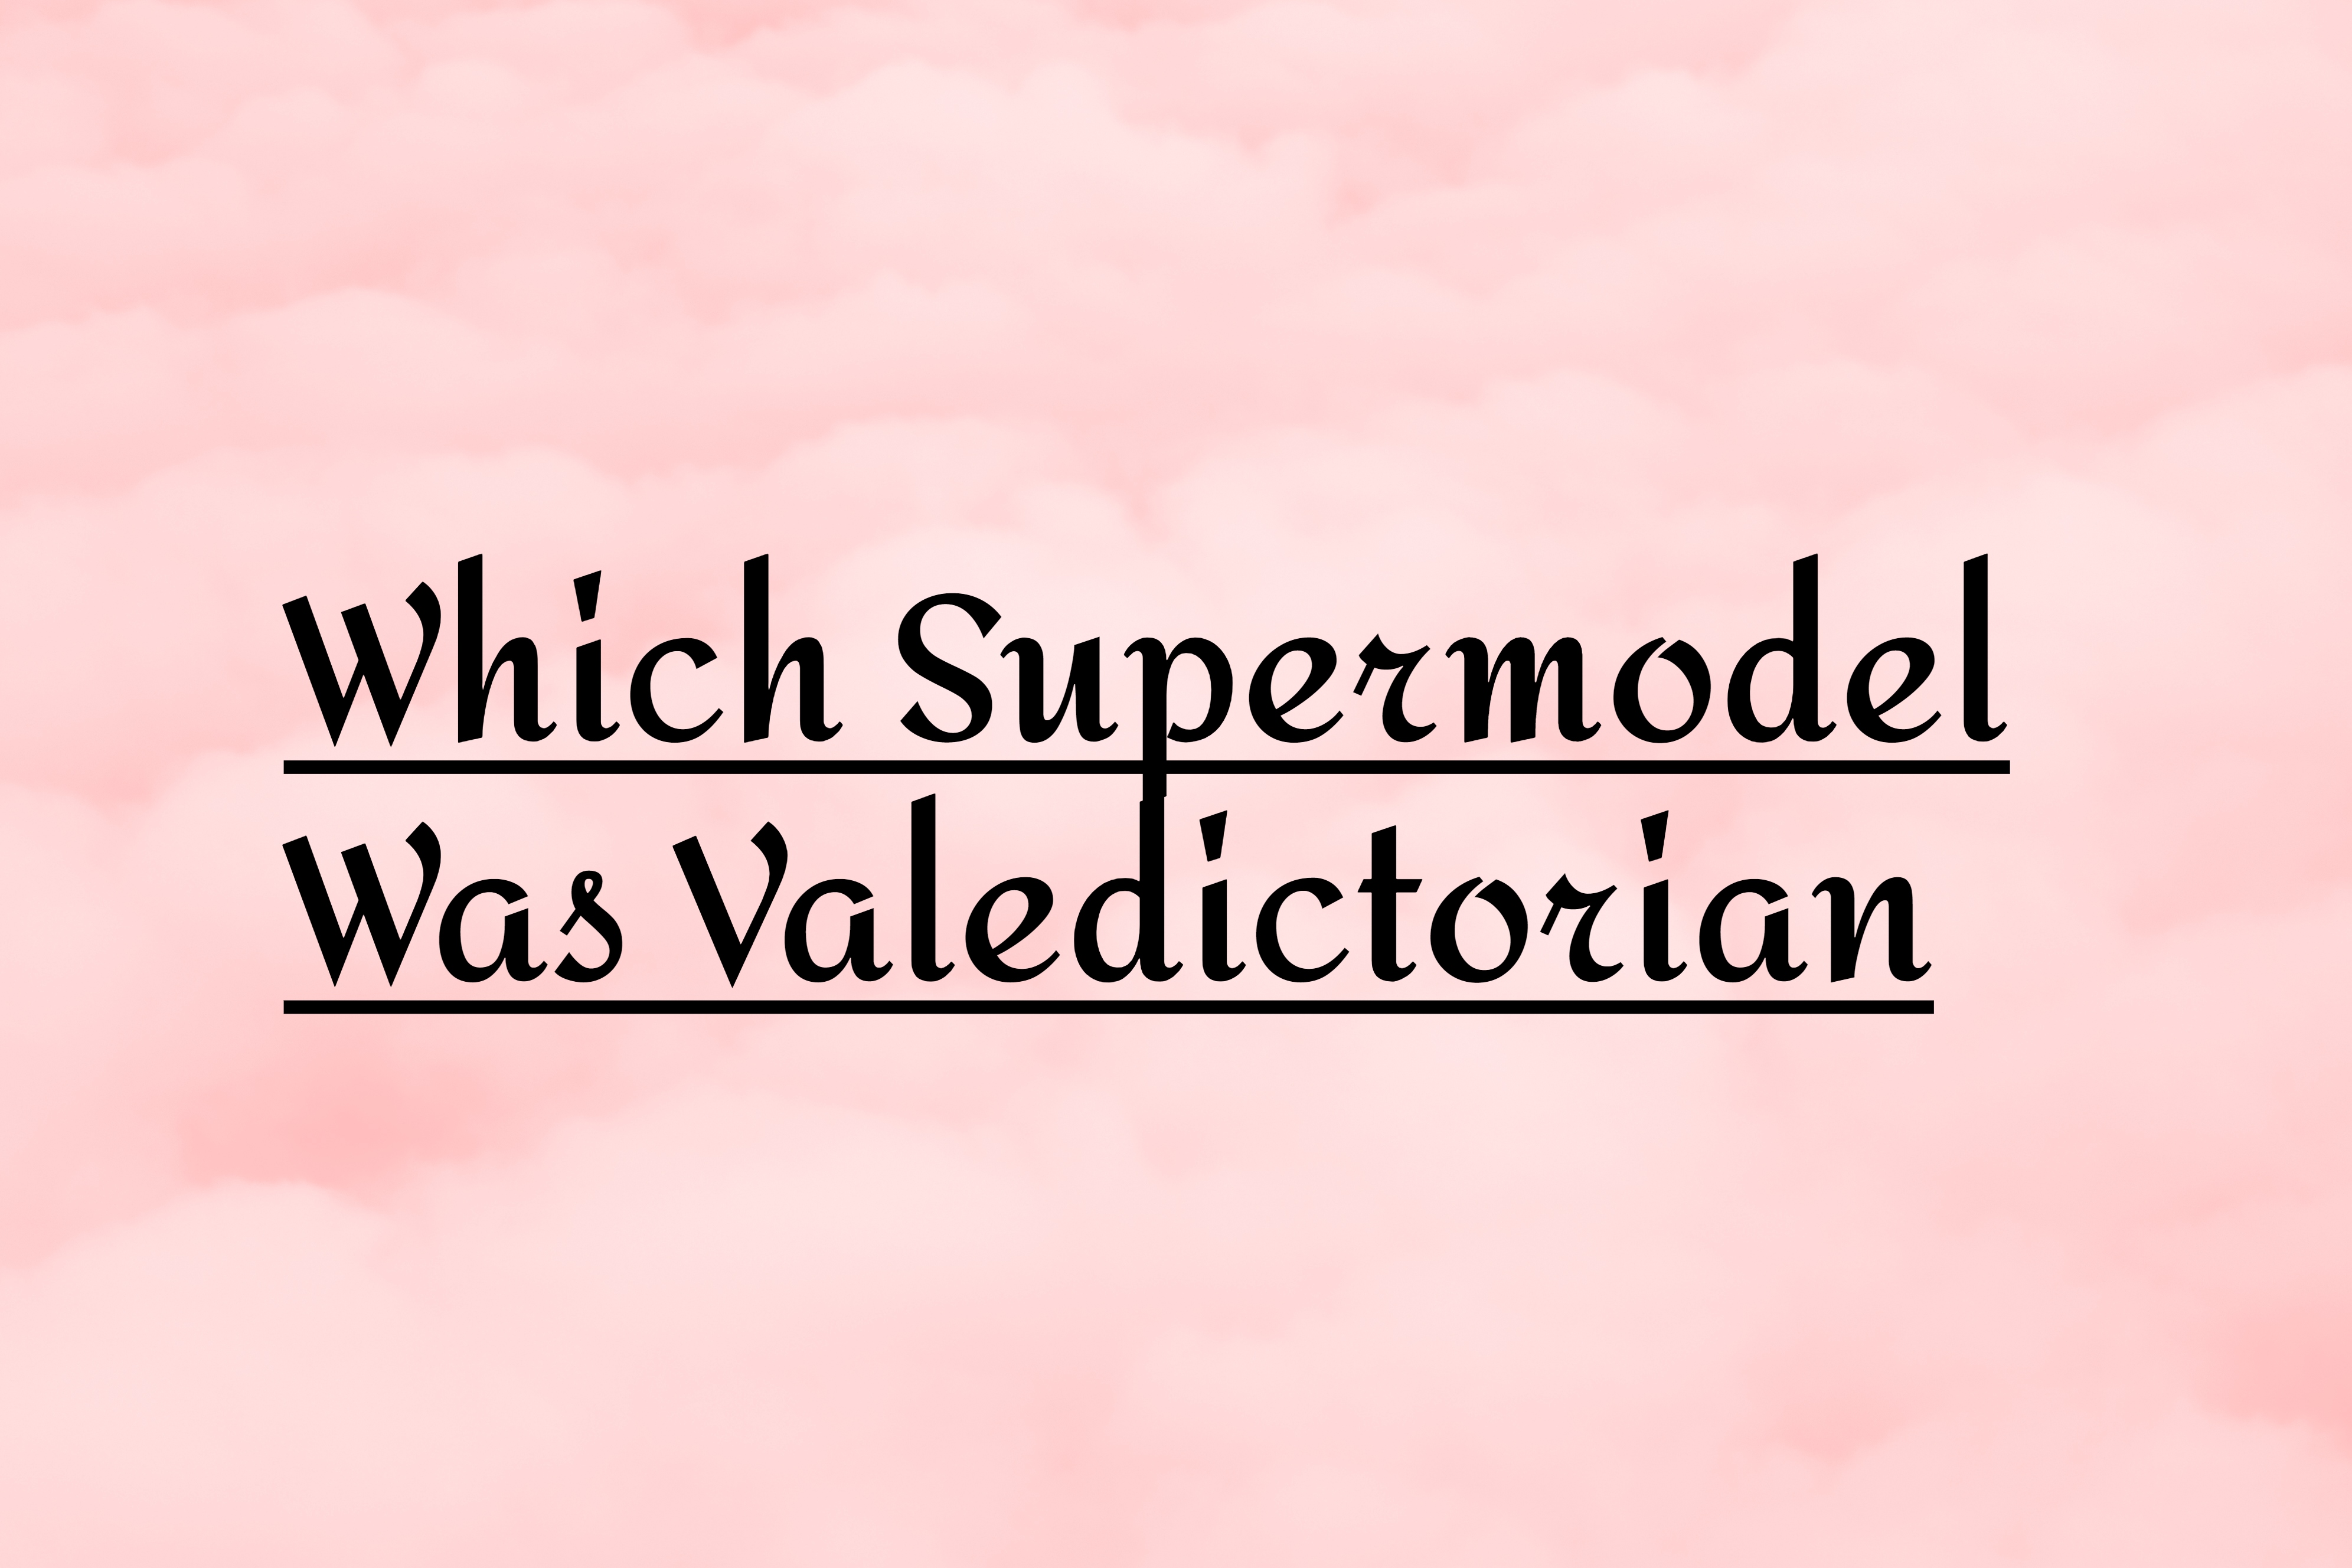 Which Supermodel Was Valedictorian?